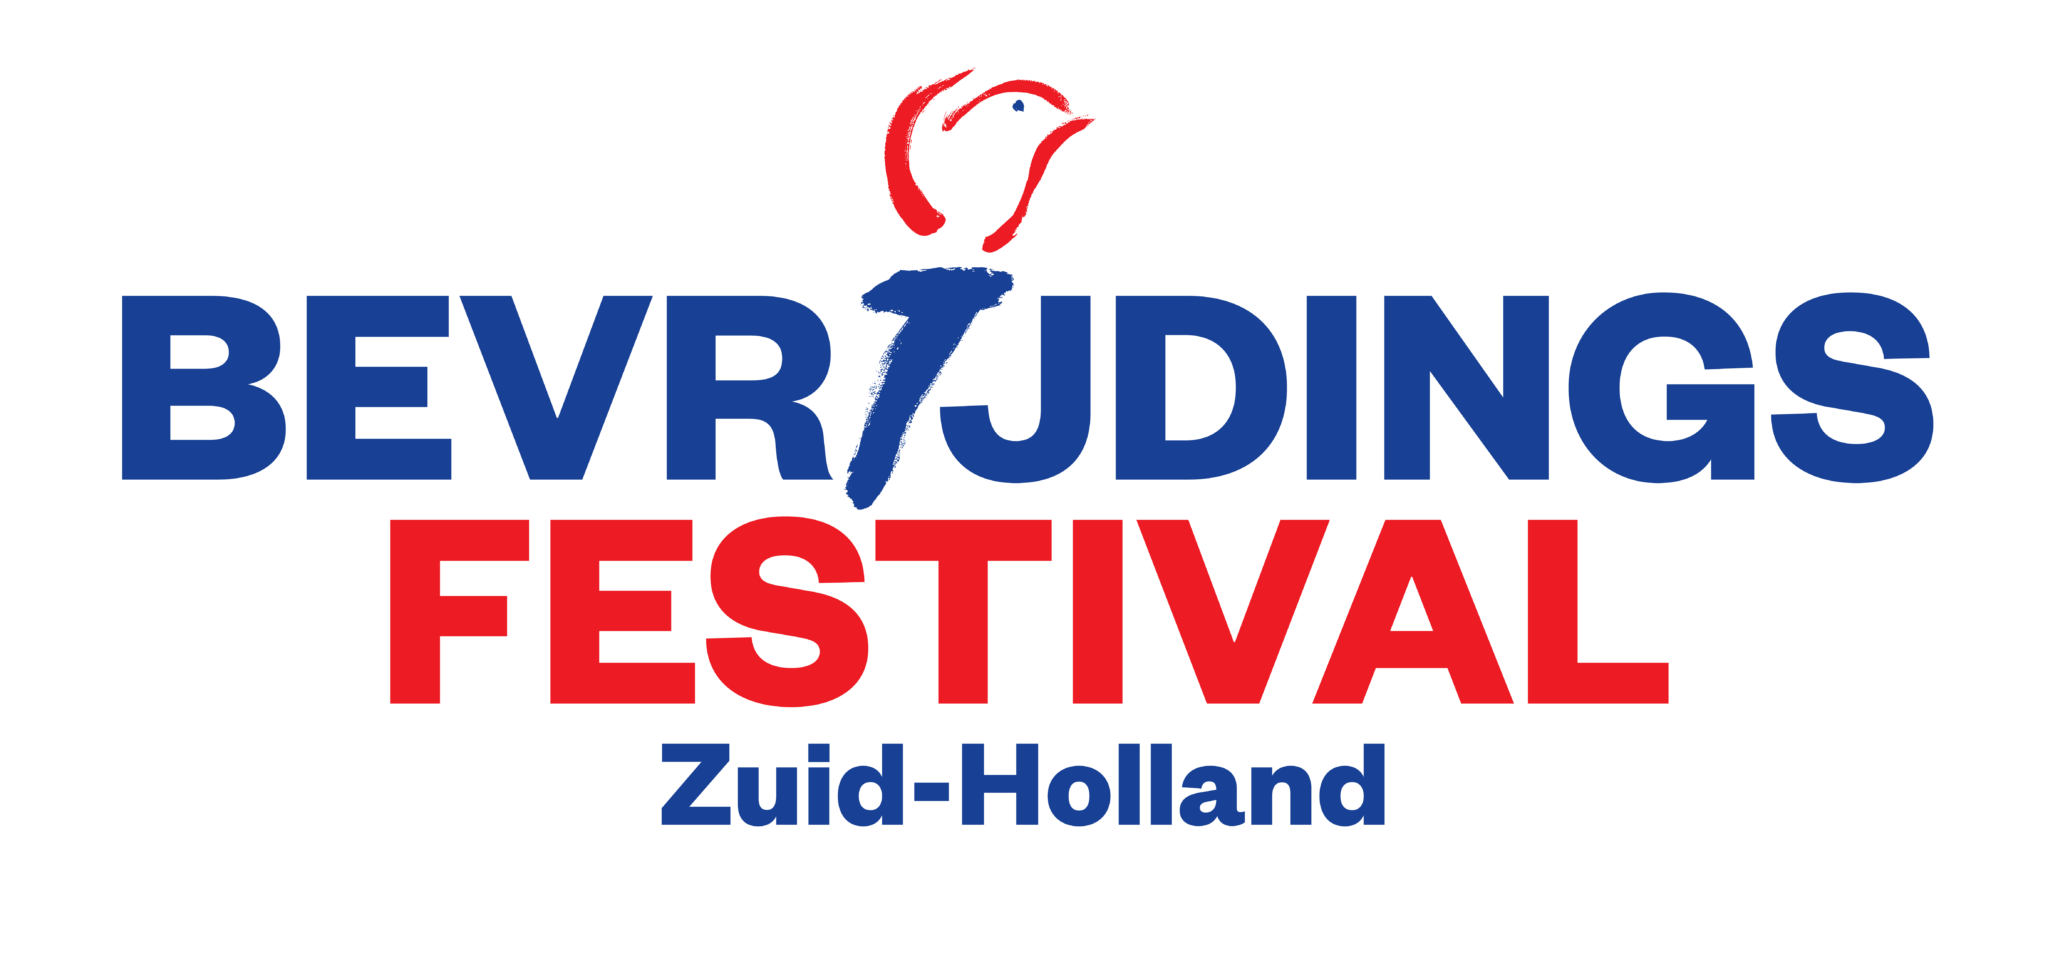 Bevrijdingsfestival Zuid Holland